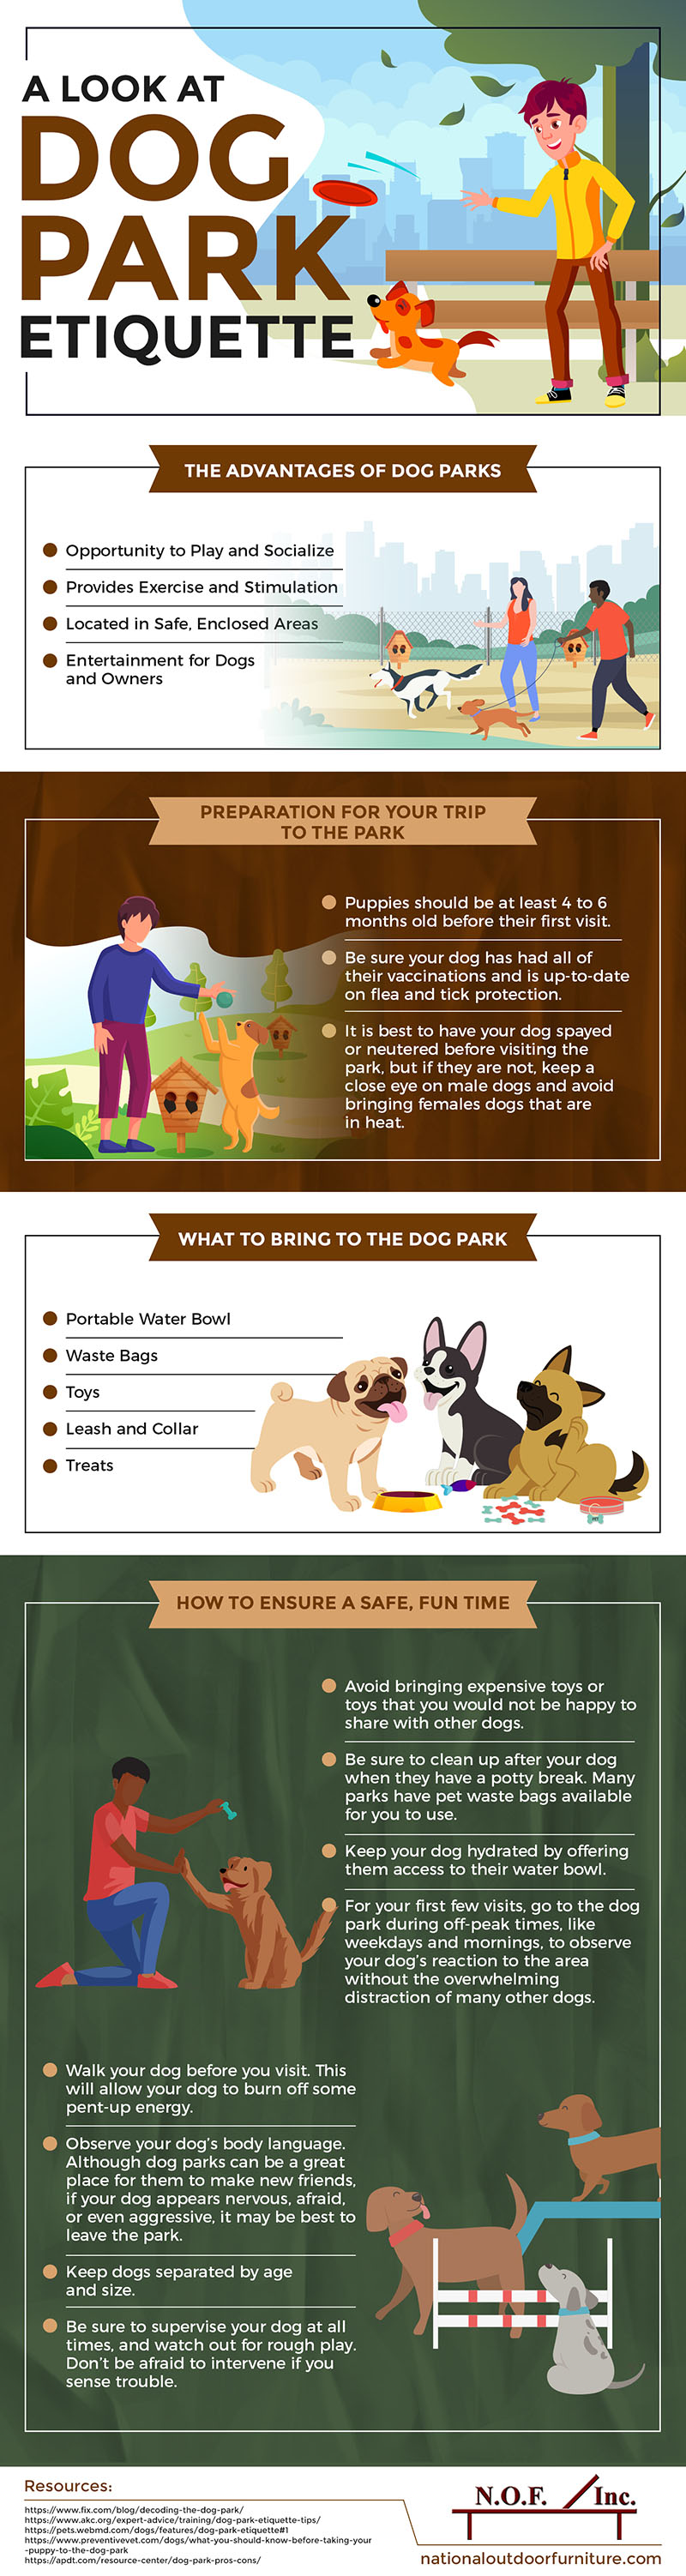 A Look at Dog Park Etiquette 